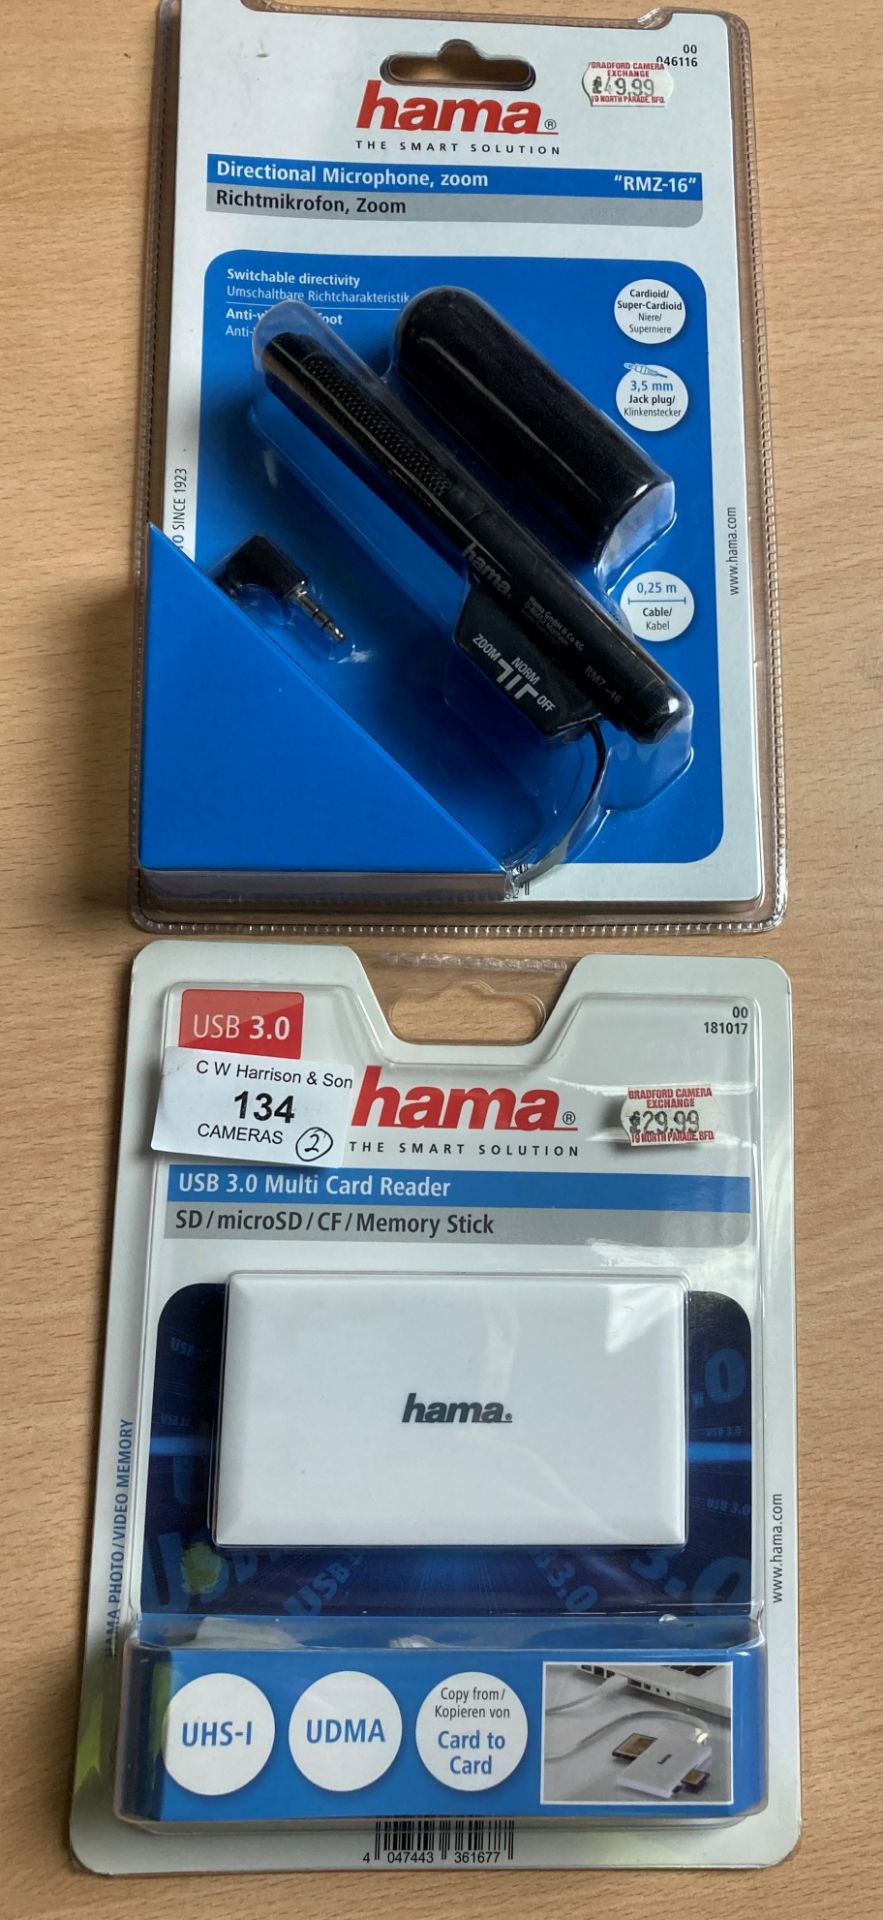 Hama USB 3.0 multi card reader and a Hama directional microphone RMZ16 (new) (RRP £70.